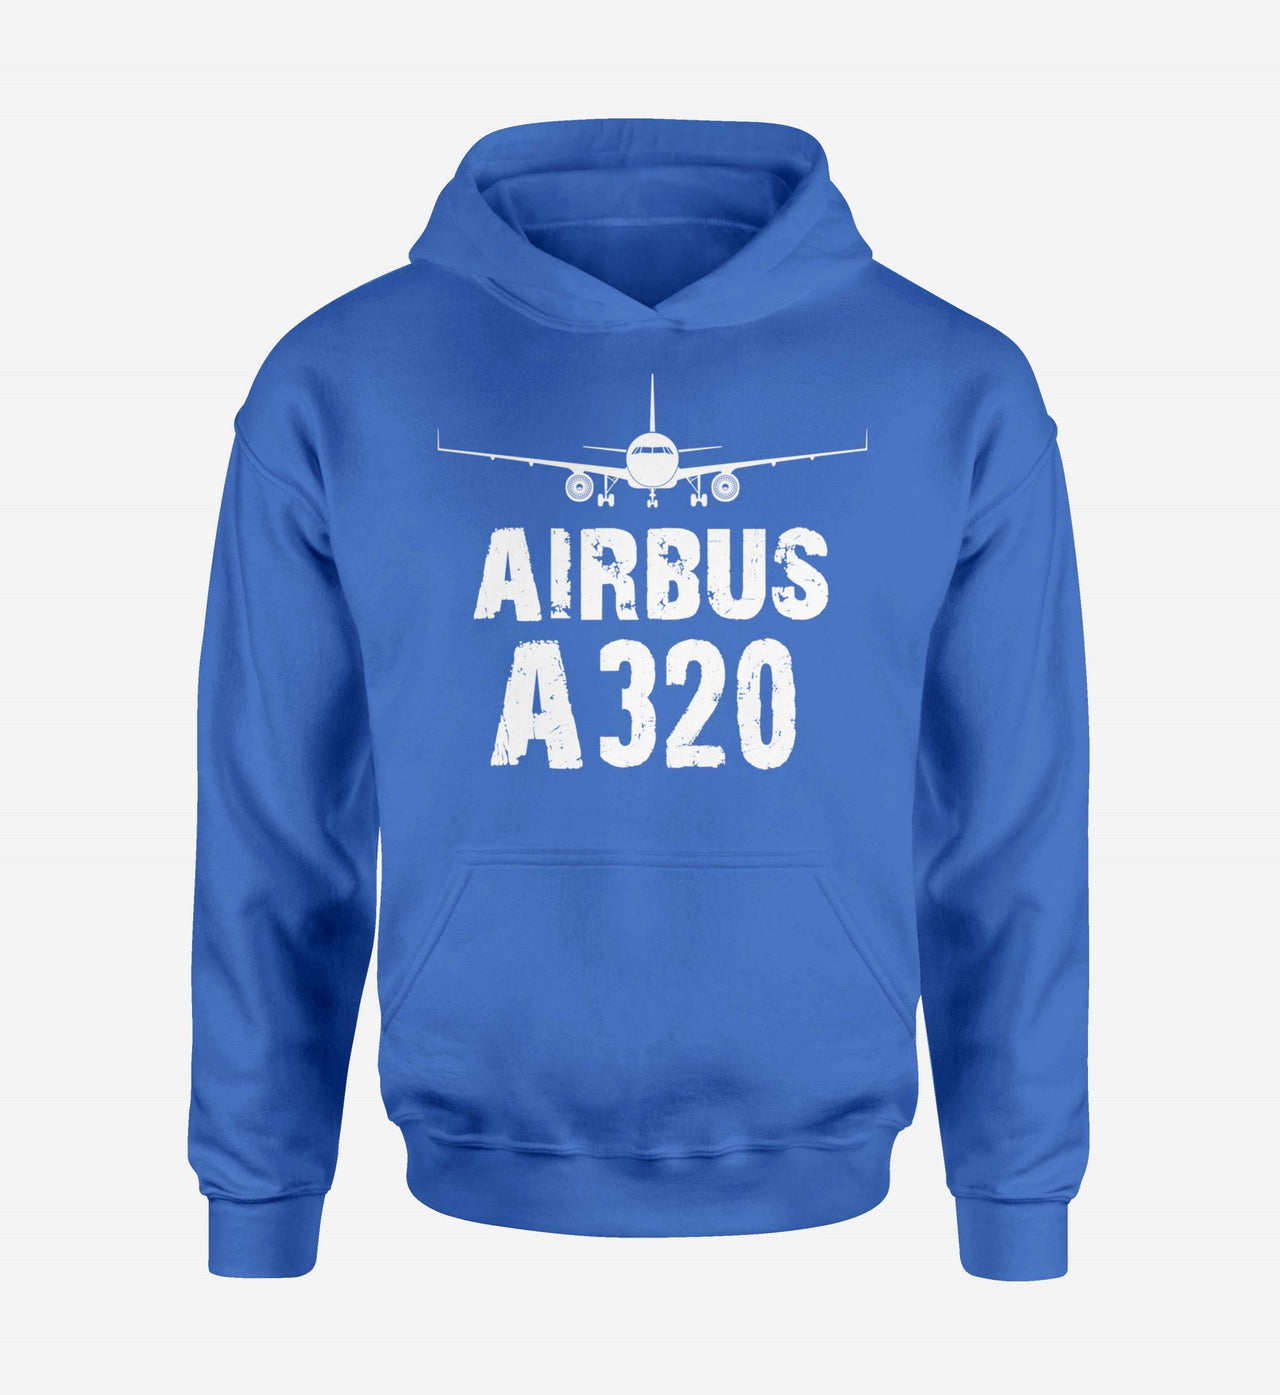 Airbus A320 & Plane Designed Hoodies